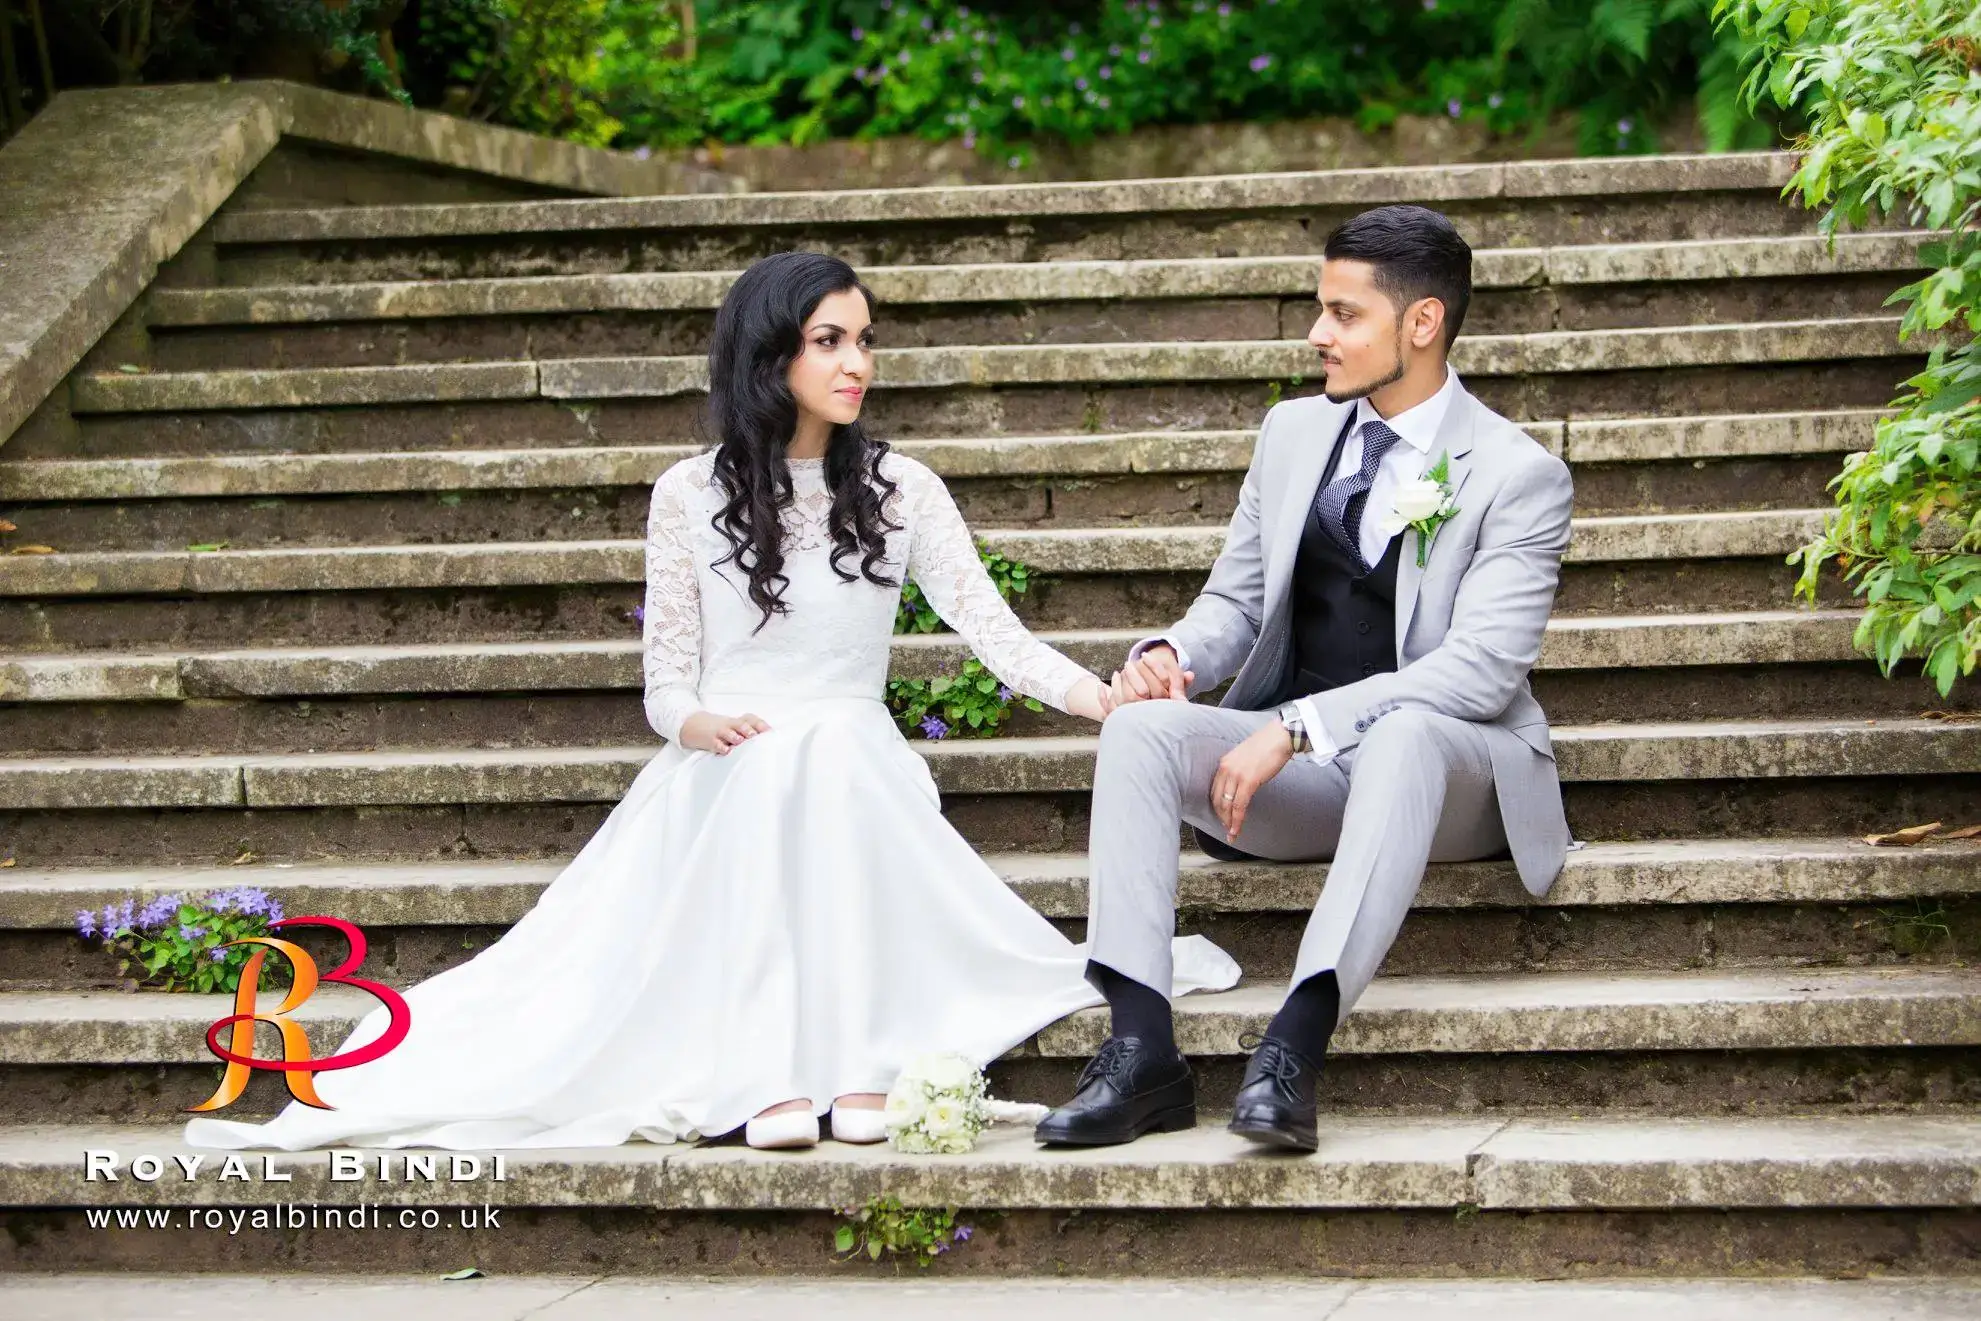 Asian Wedding Photography Service Areas | Royal Bindi